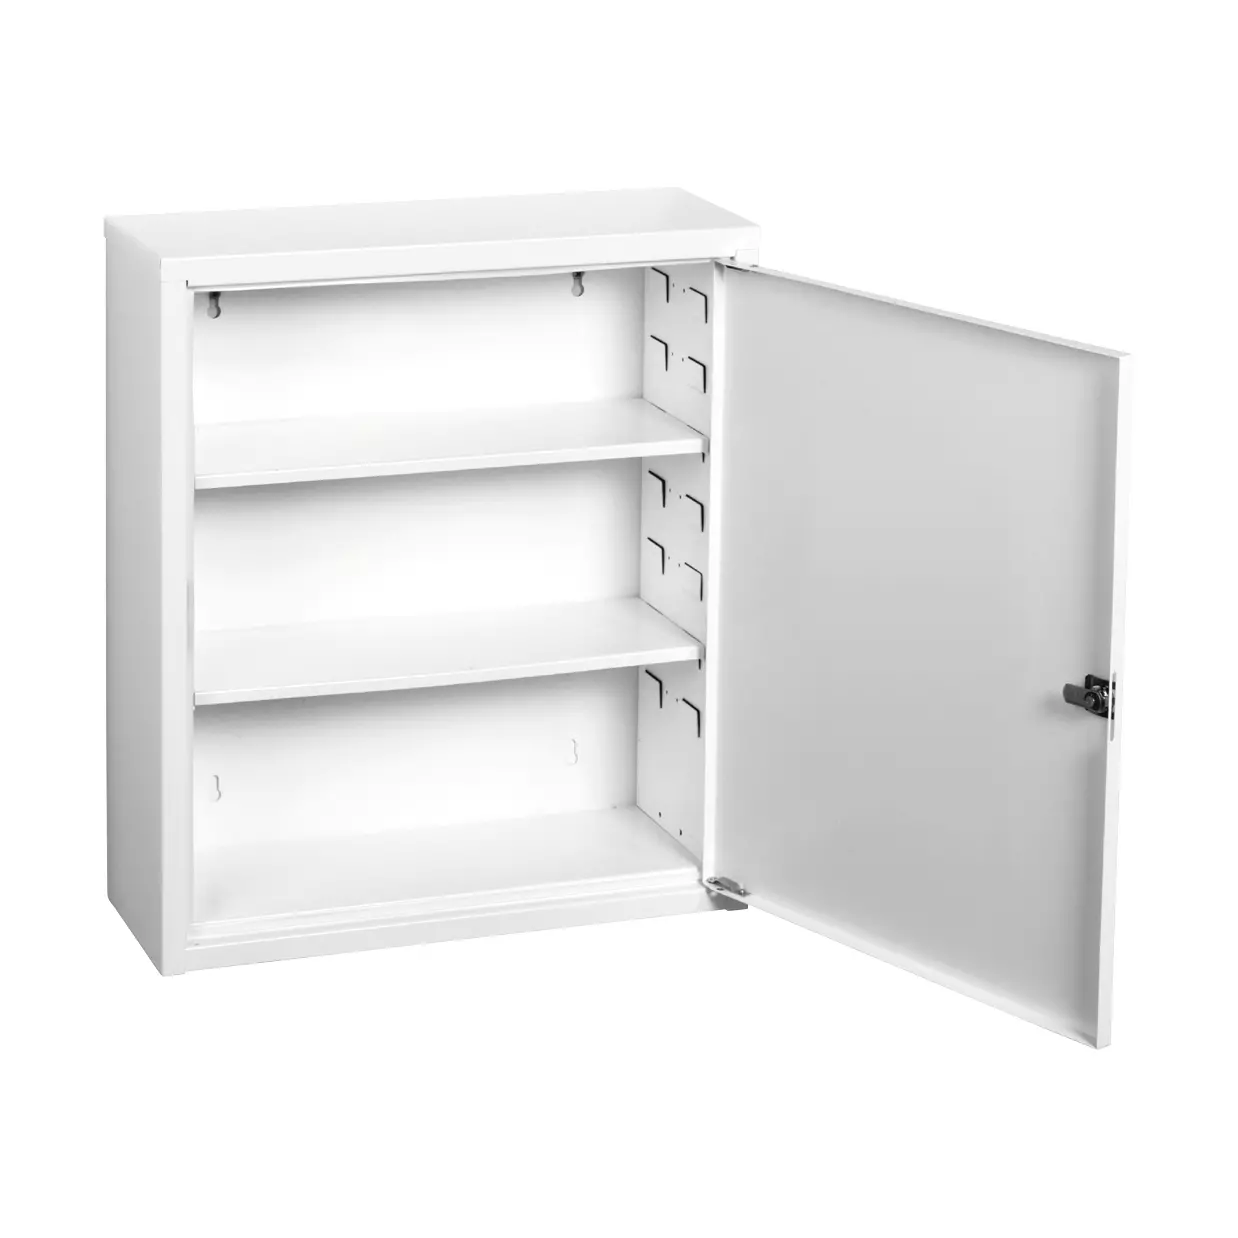 WERO dressing cabinet MaxiTrio 400, with 2 adjustable shelves, empty